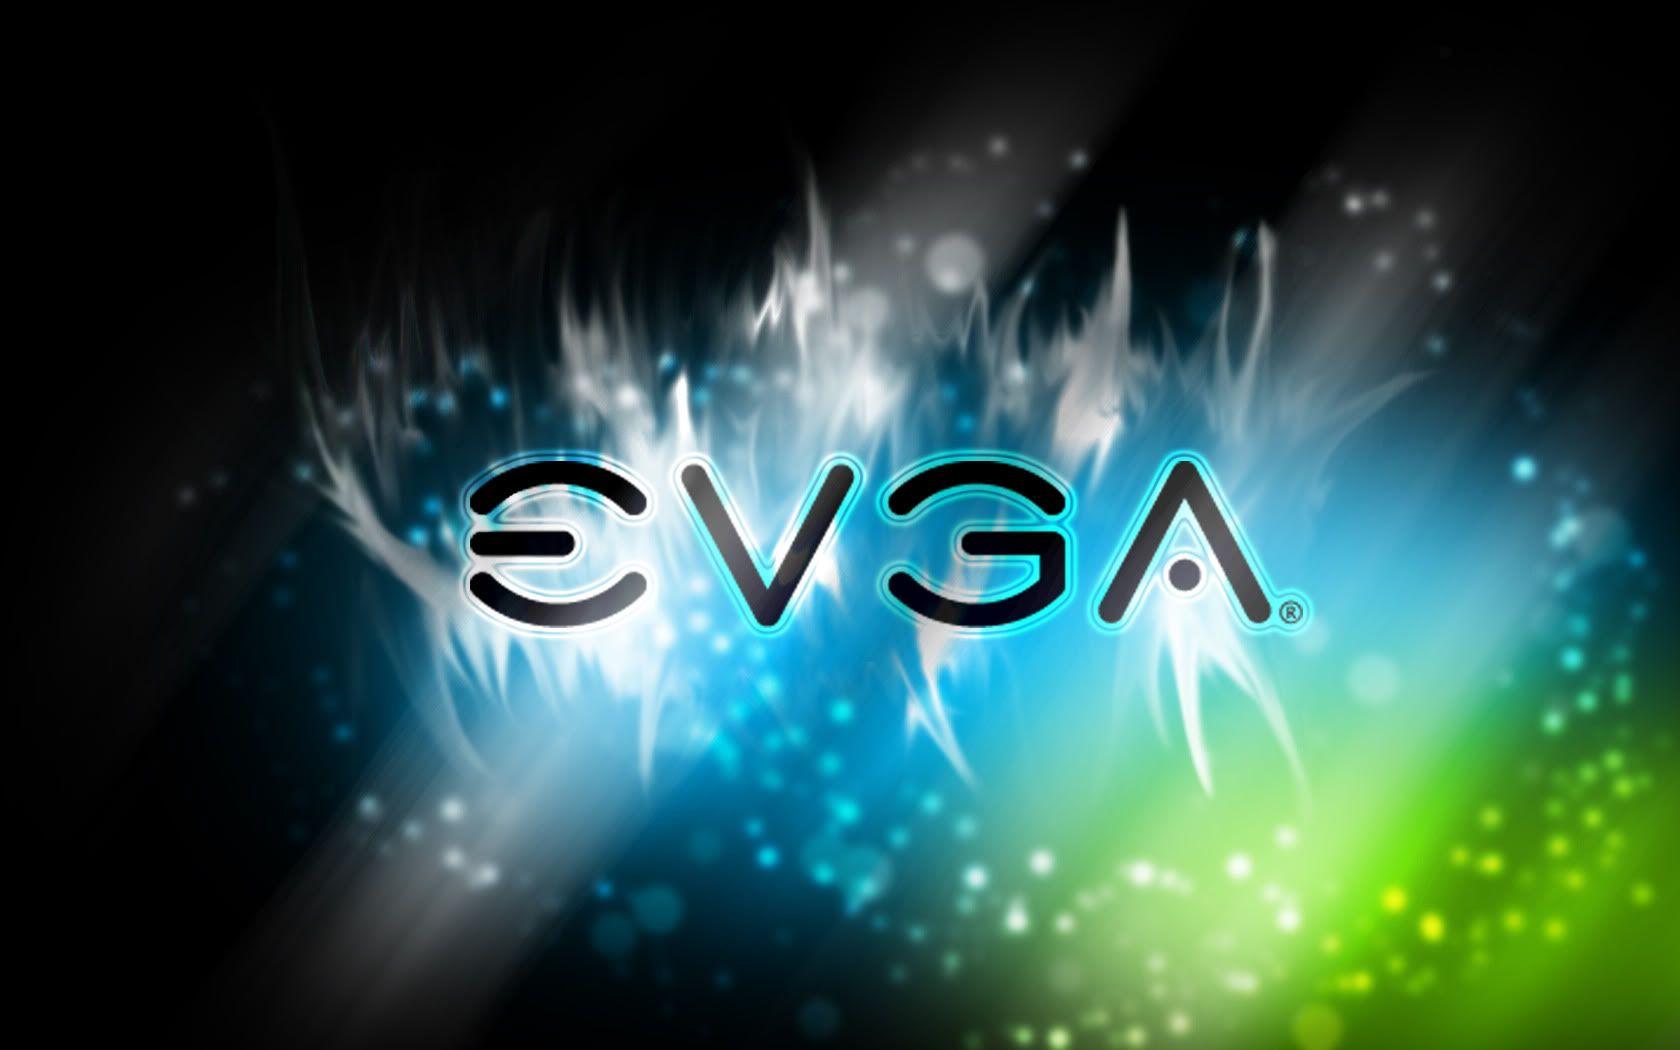 EVGA Wallpaper contest [My entry]